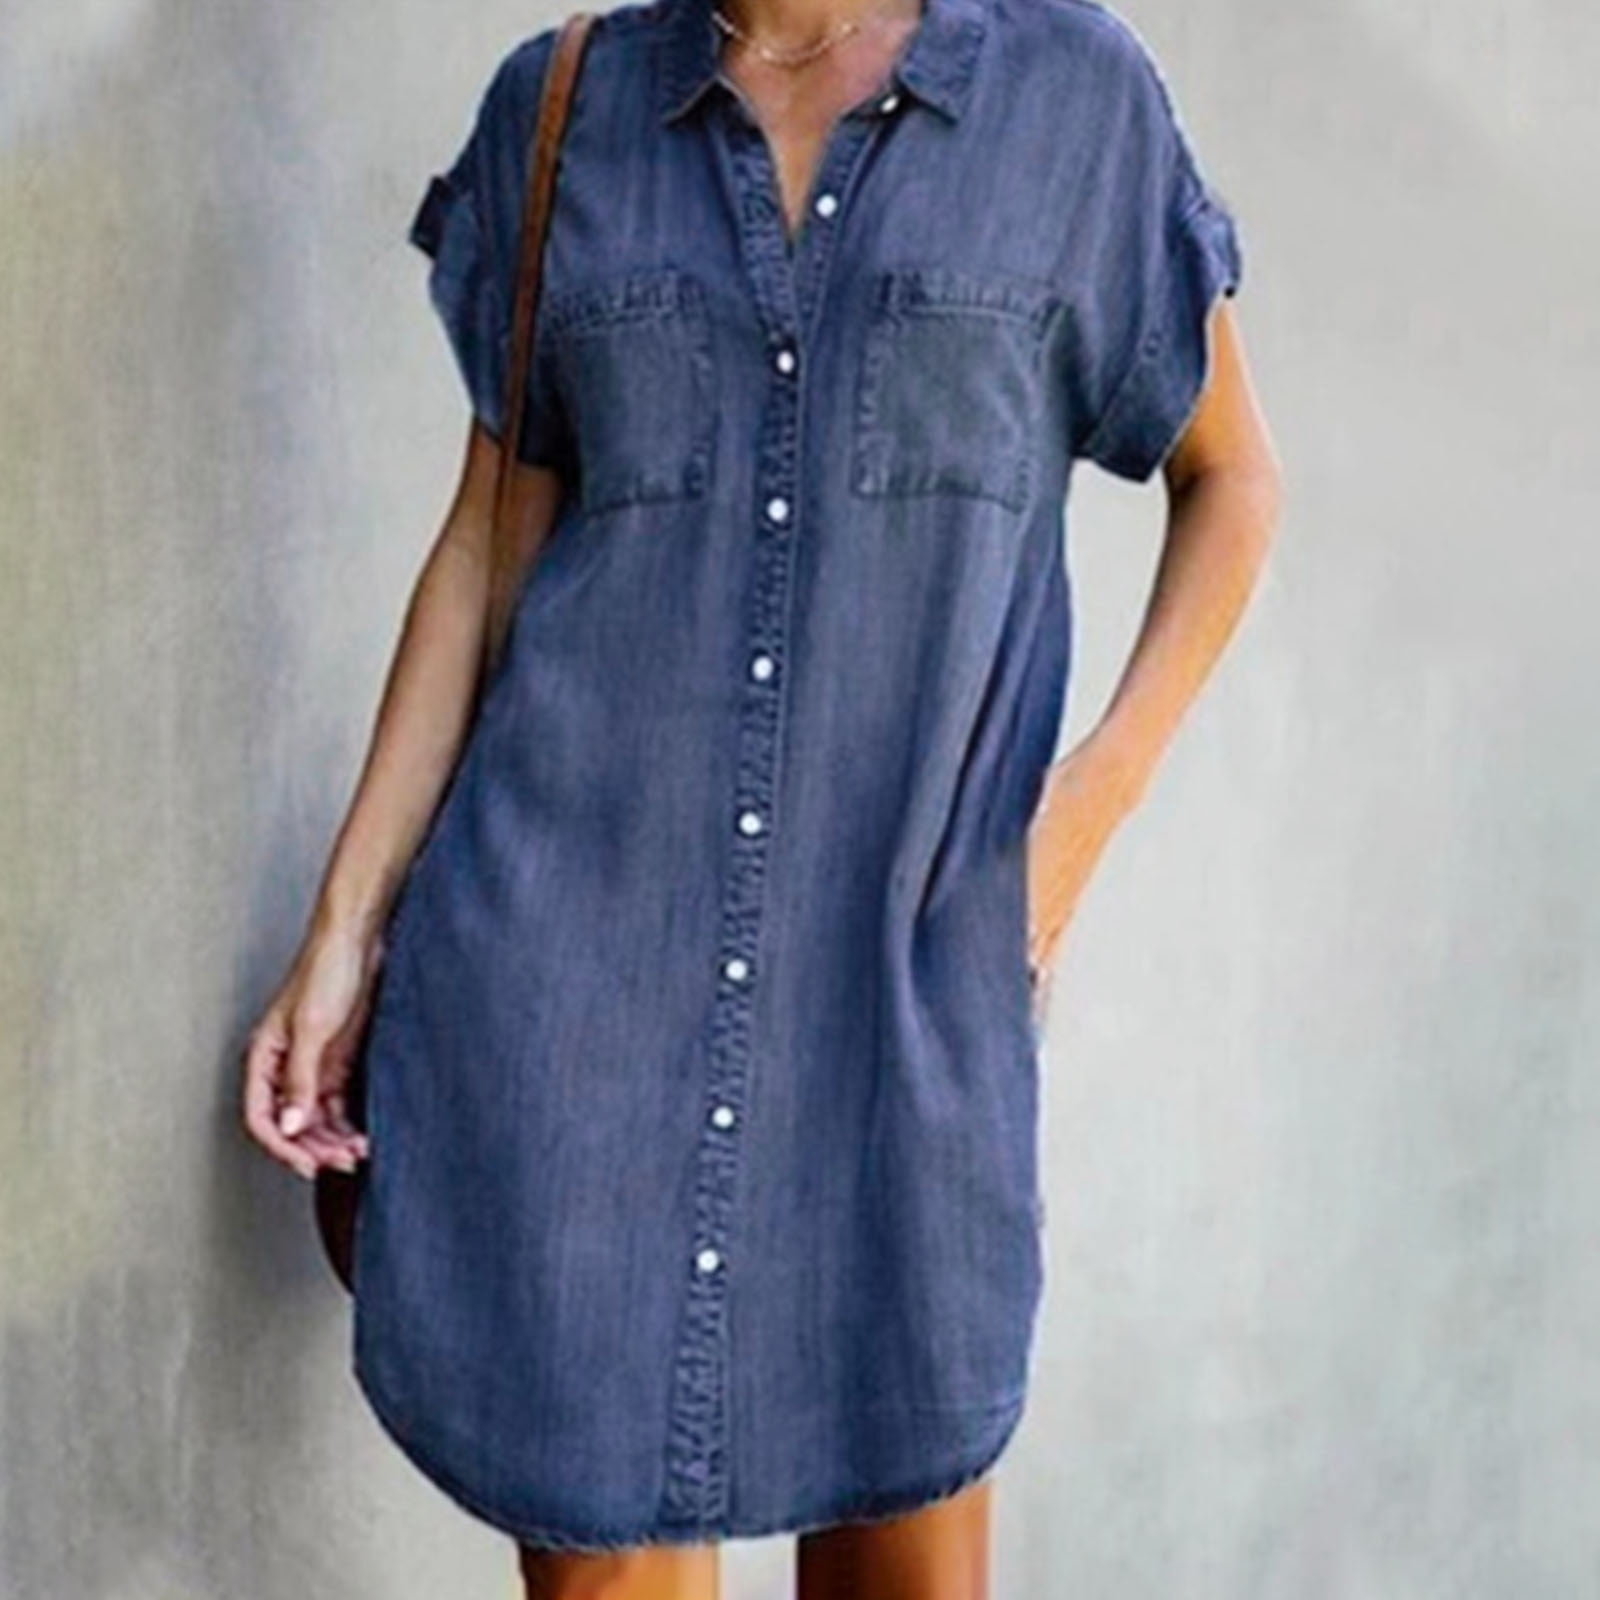 Women's Denim Shirt Dresses Long Sleeve Distressed Jean Dress Button Down Casual Tunic Top